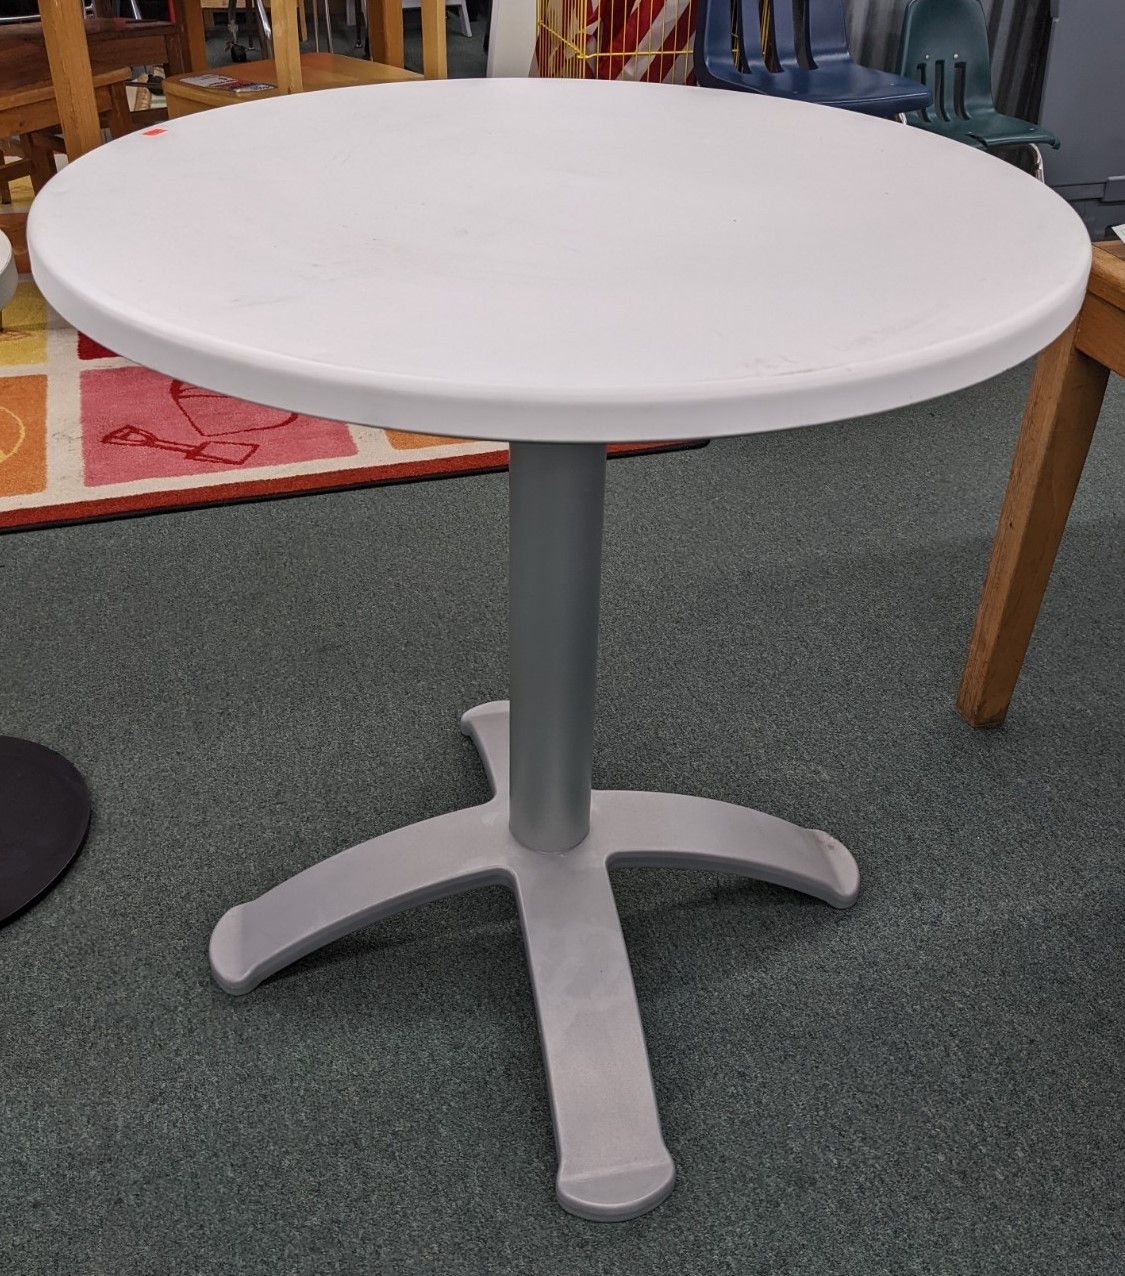 Used Round Plastic Table